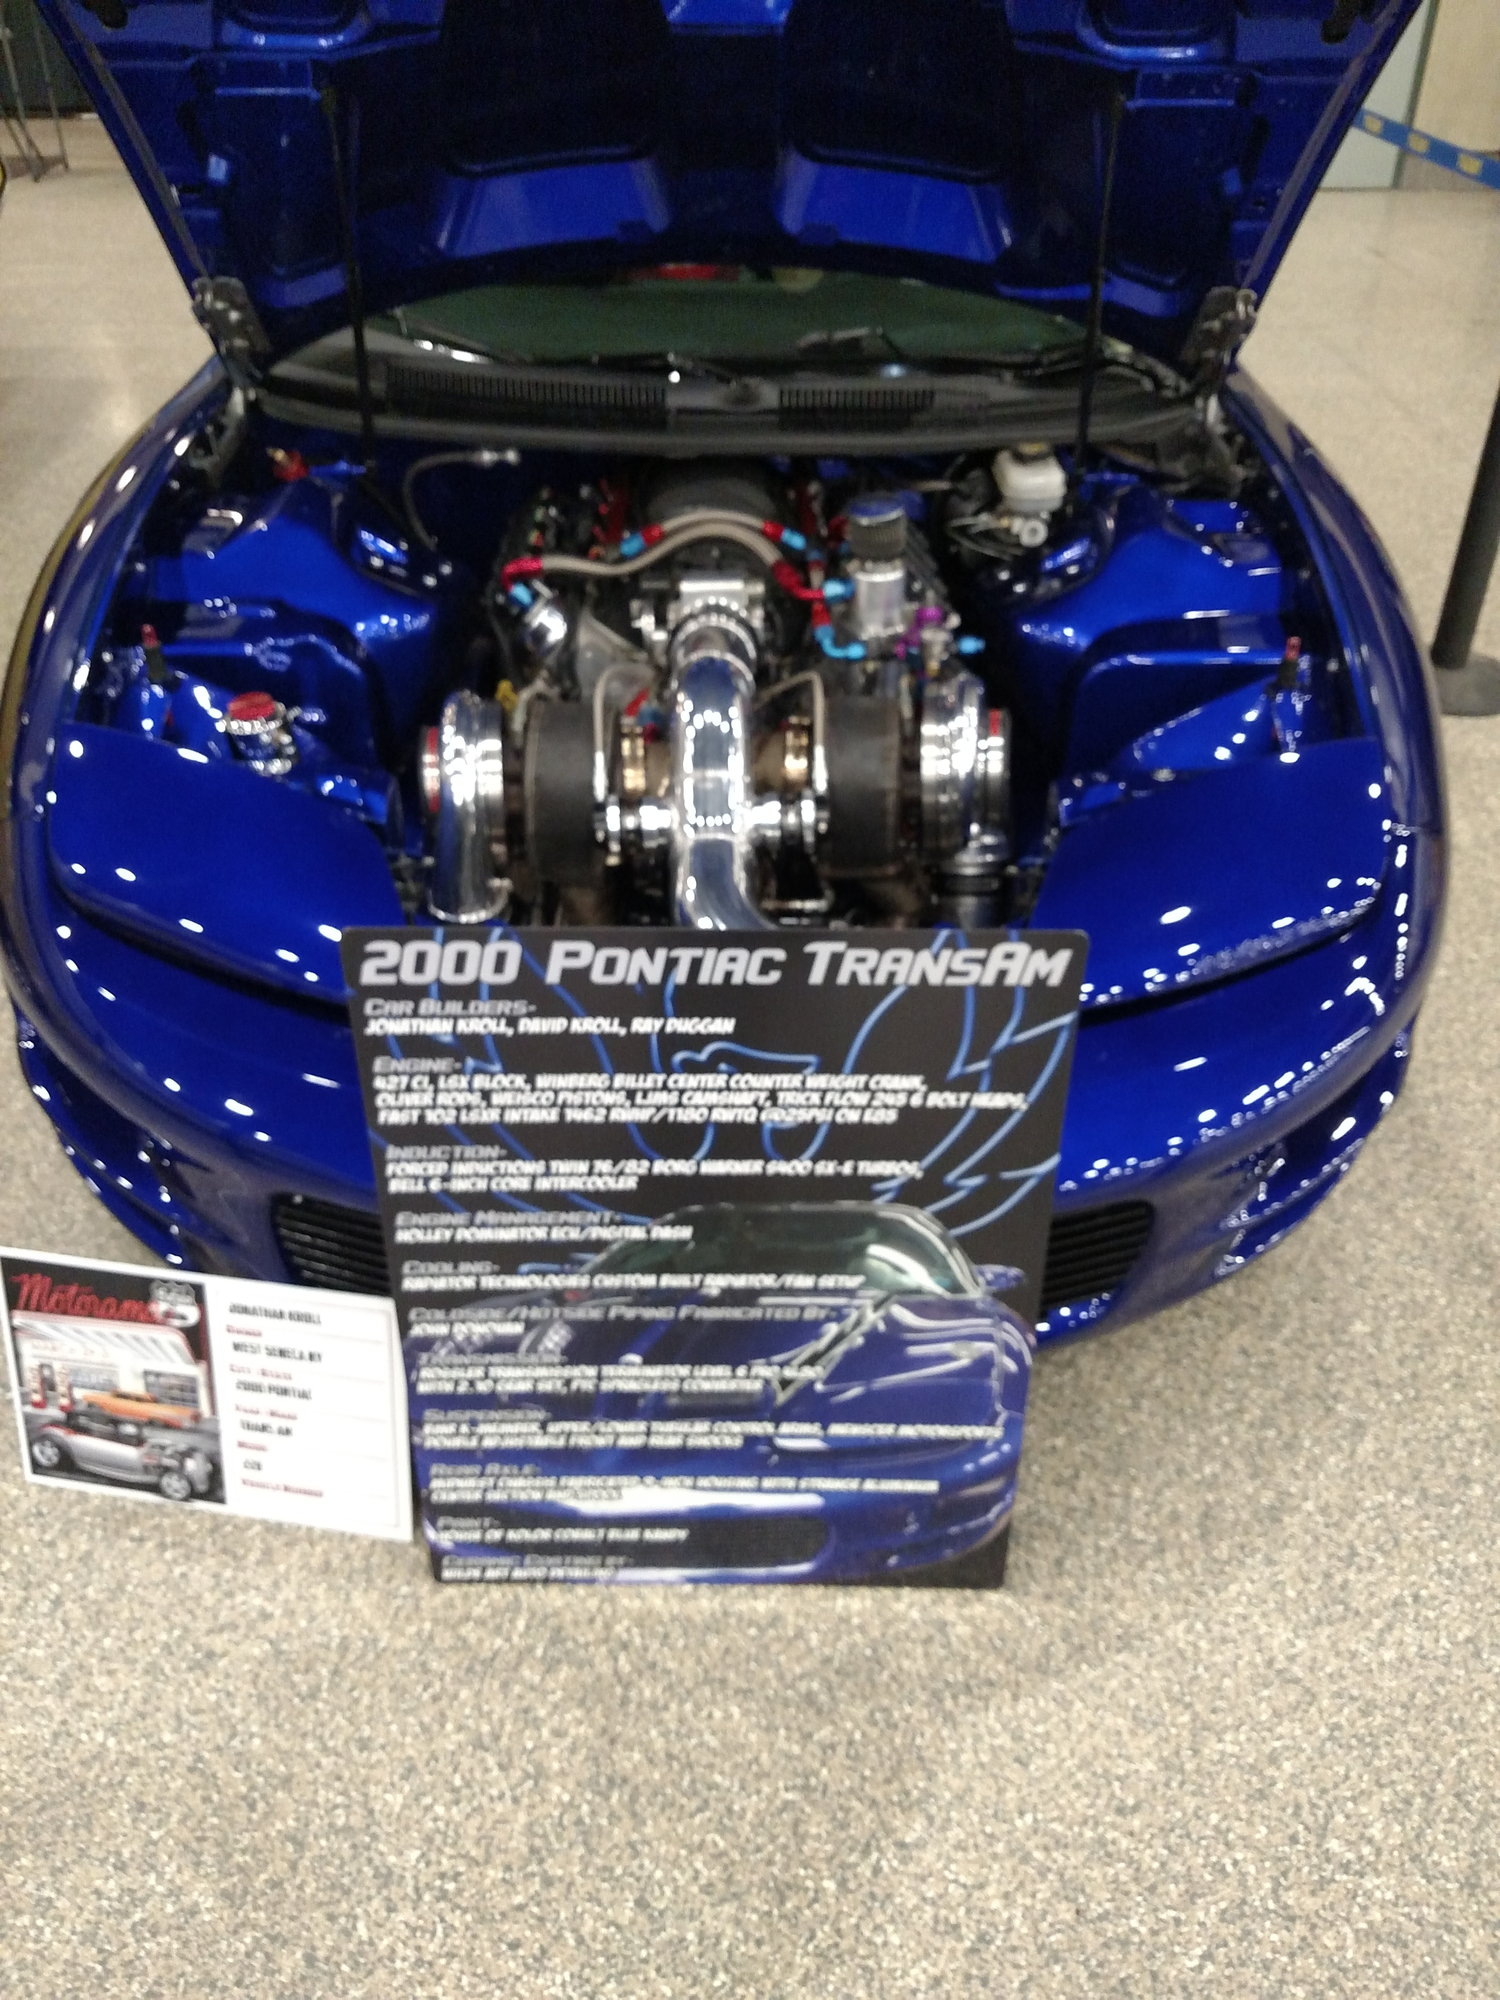 2000 Pontiac Firebird - Twin turbo 2000 trans am - Used - Buffalo, NY 14224, United States